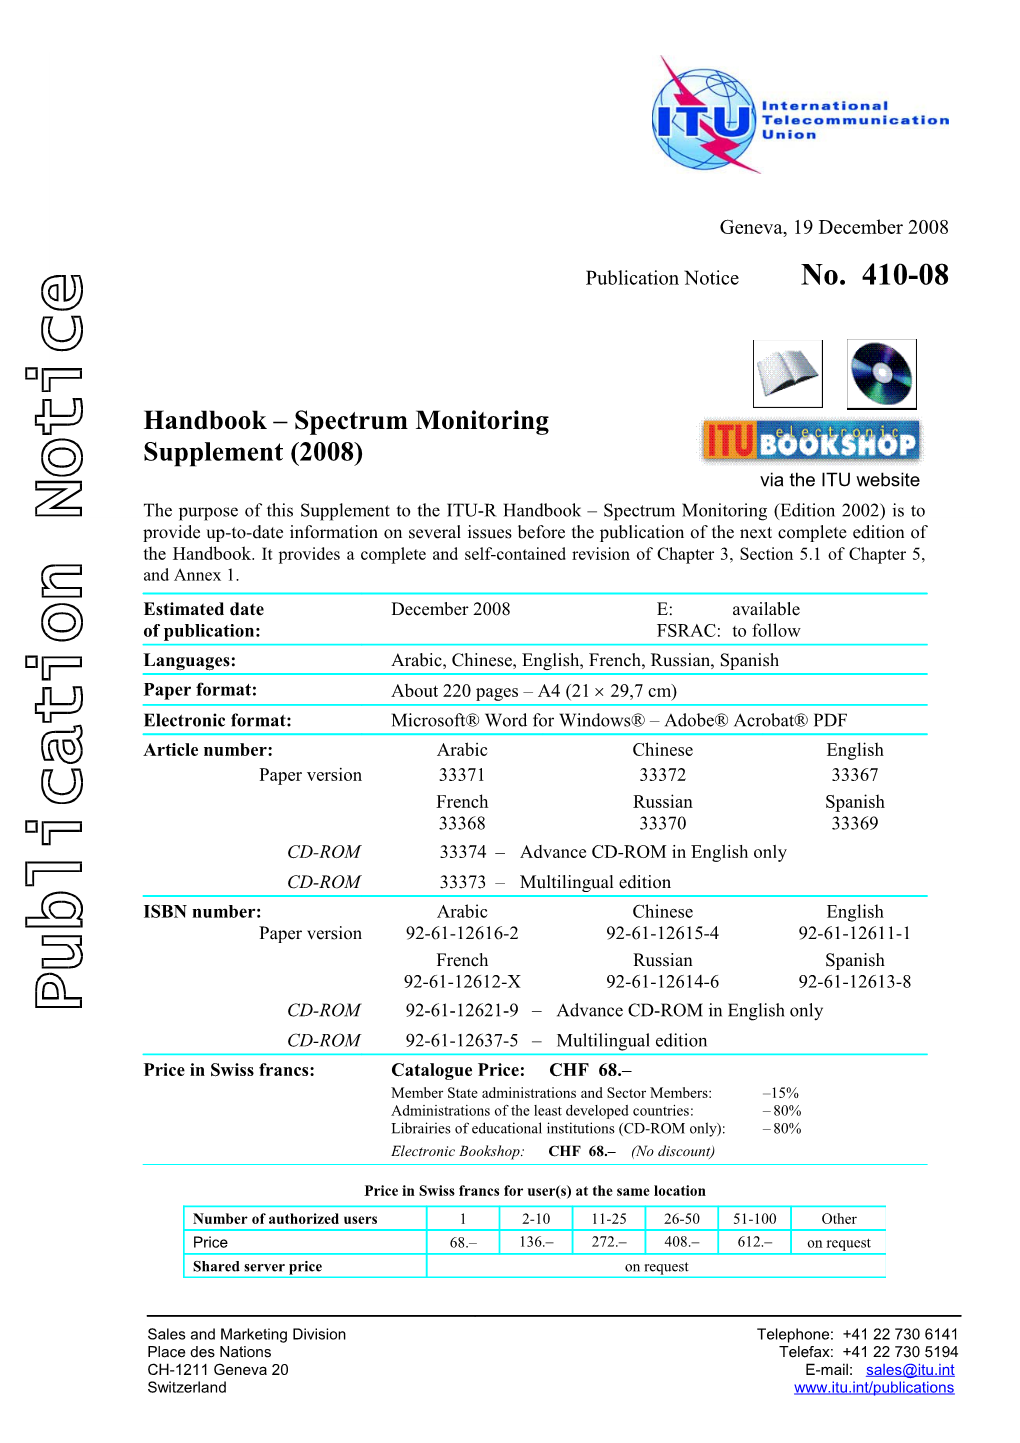 Publication Notice No. 410-08 Supplement Handbook Spectrum Monitoring (Edition 2008)